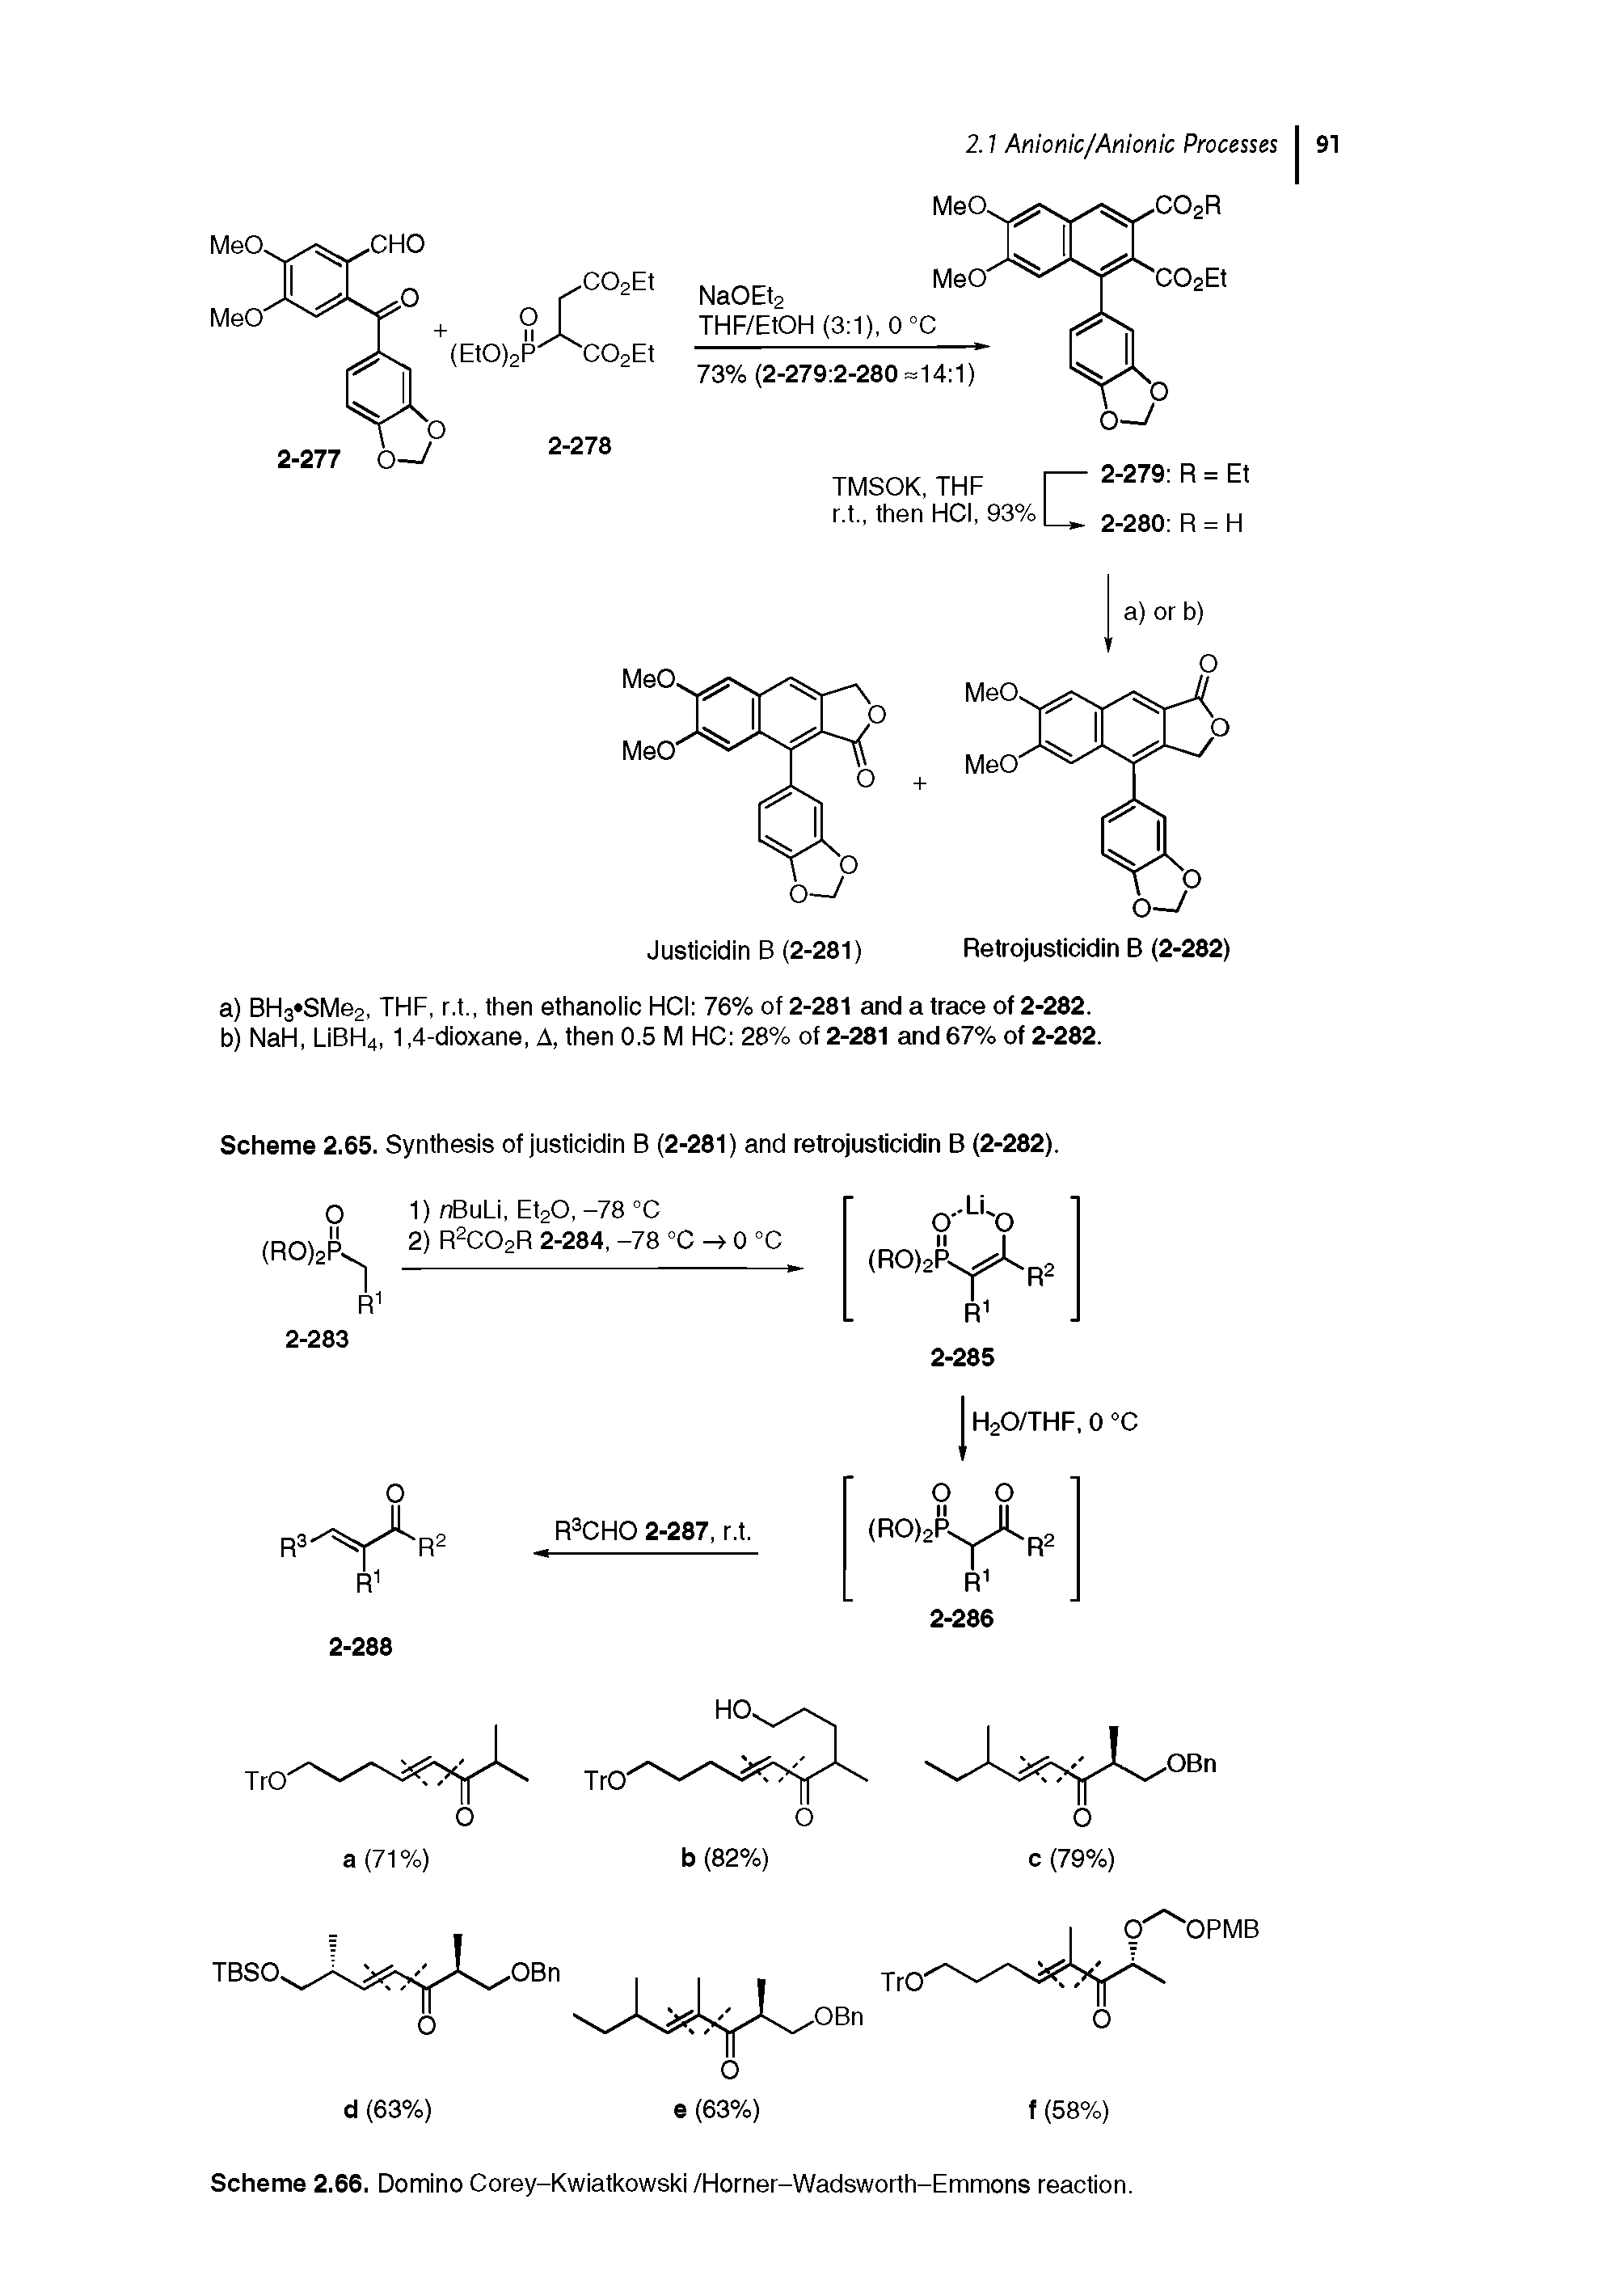 Scheme 2.66. Domino Corey-Kwiatkowski /Horner-Wadsworth-Emmons reaction.